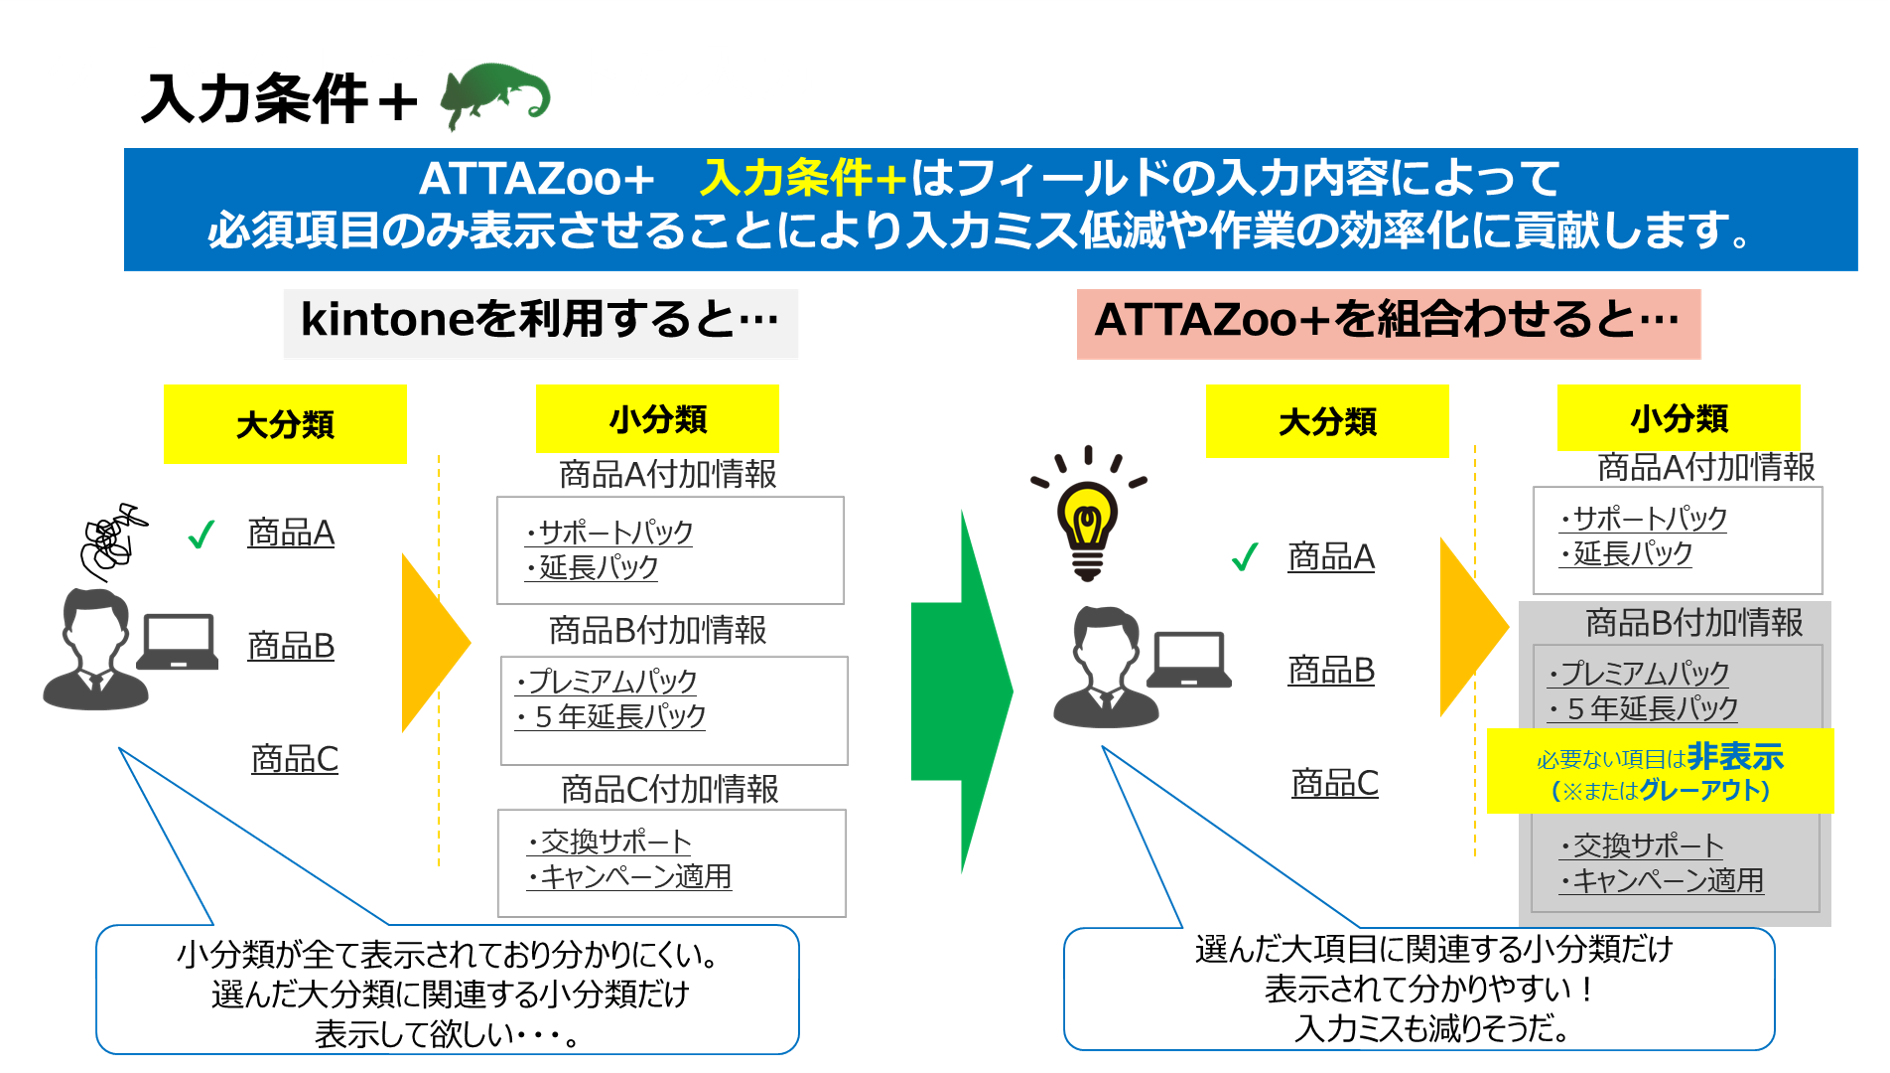 ATTAZoo+-image2-2.png